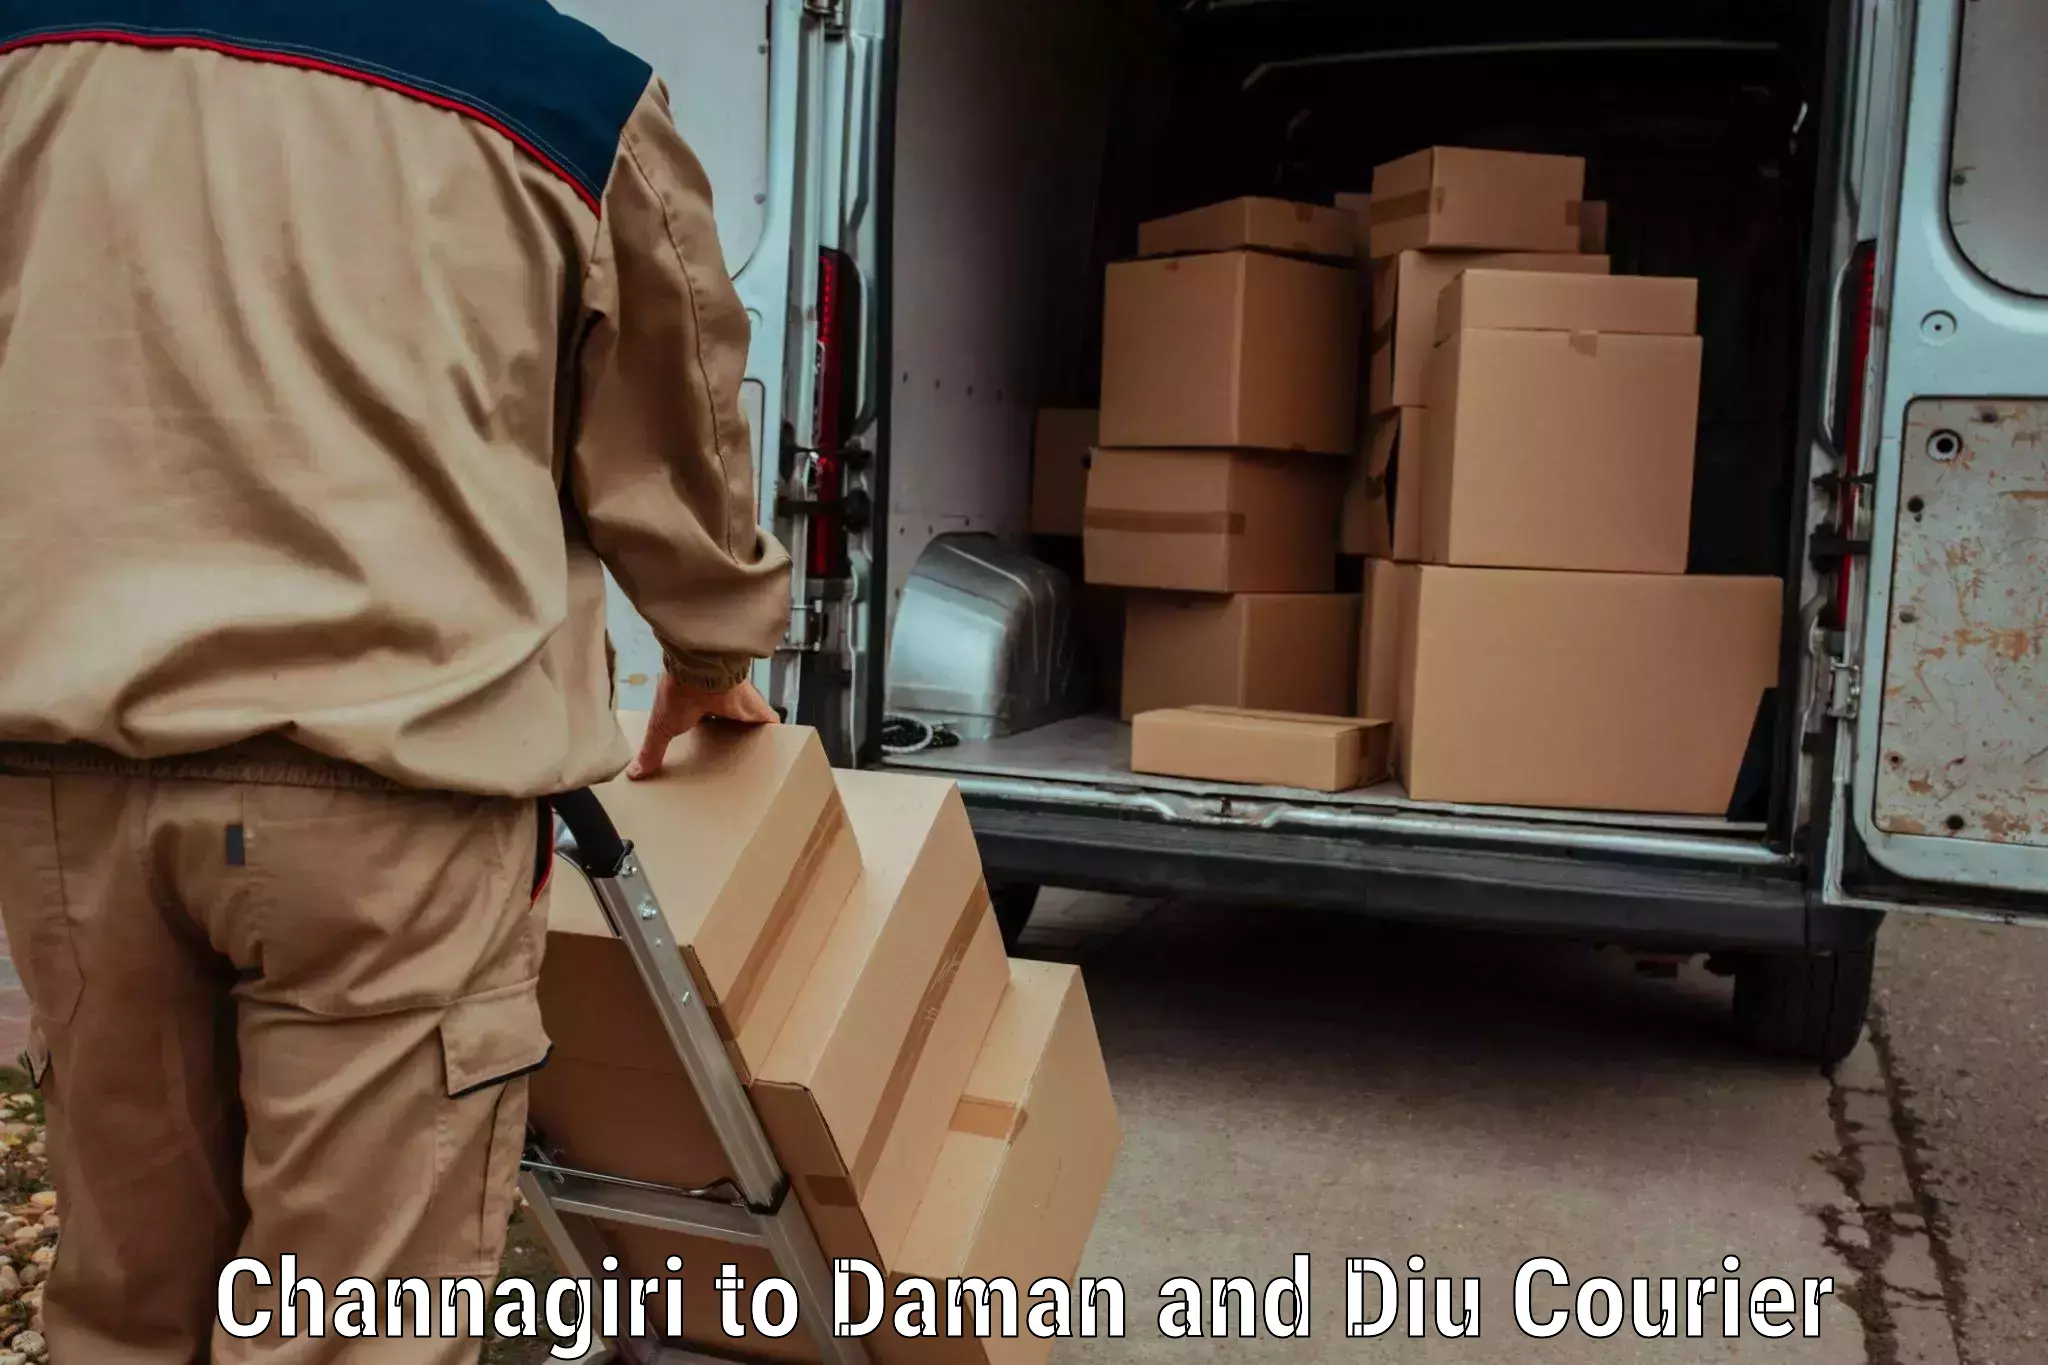 Baggage transport professionals Channagiri to Daman and Diu